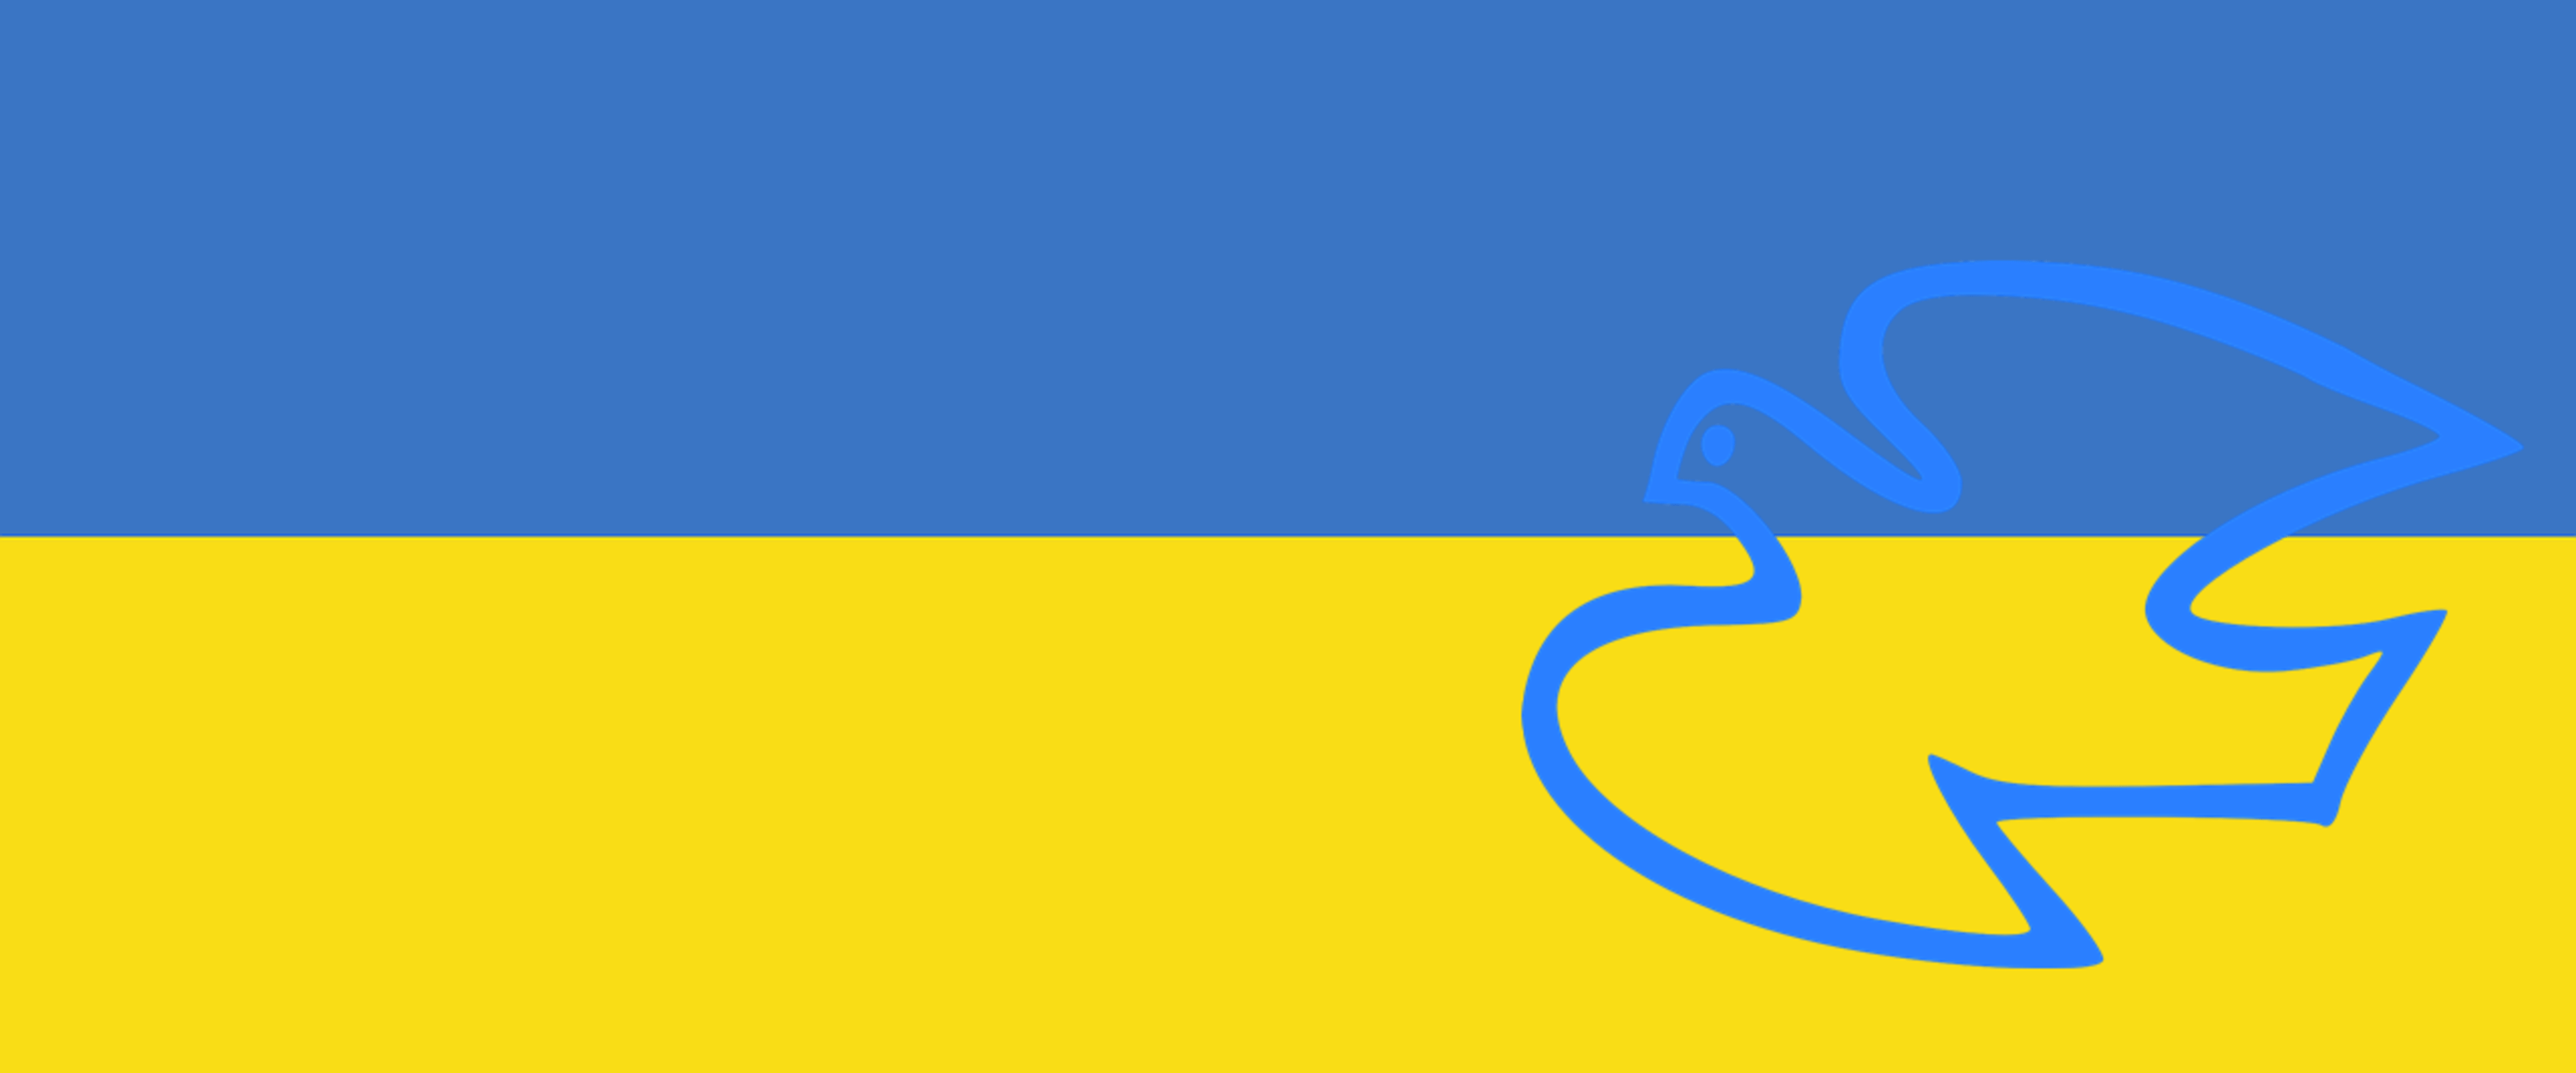 ukraine flagge